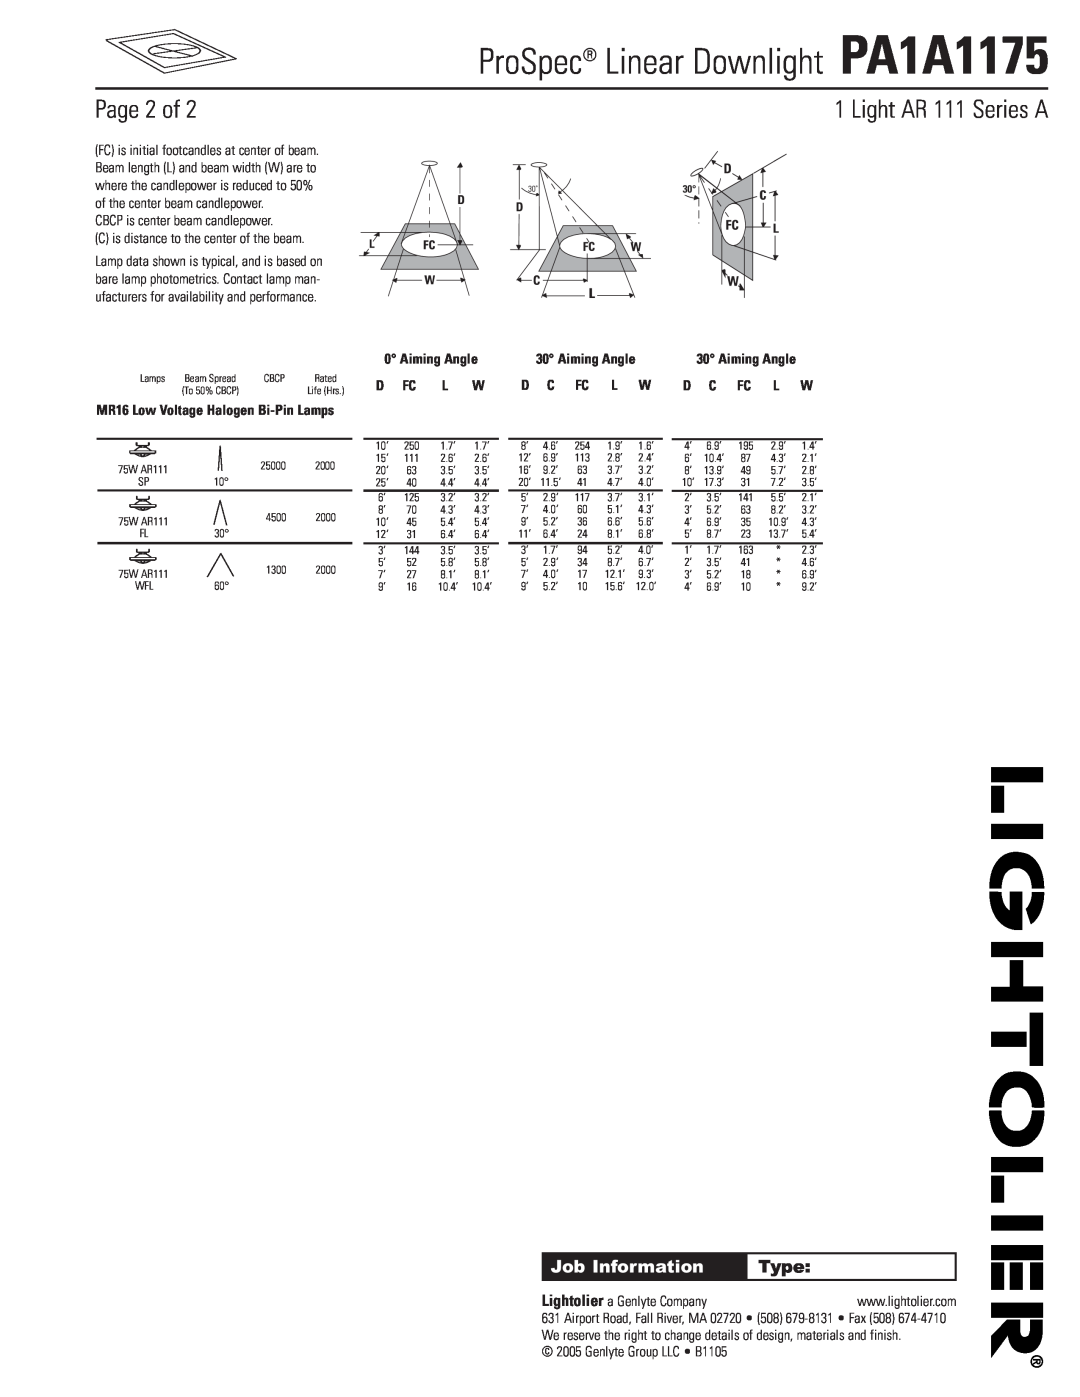 Lightolier manual Page 2 of, Light AR 111 Series A, ProSpec Linear Downlight PA1A1175, Job Information, Type 